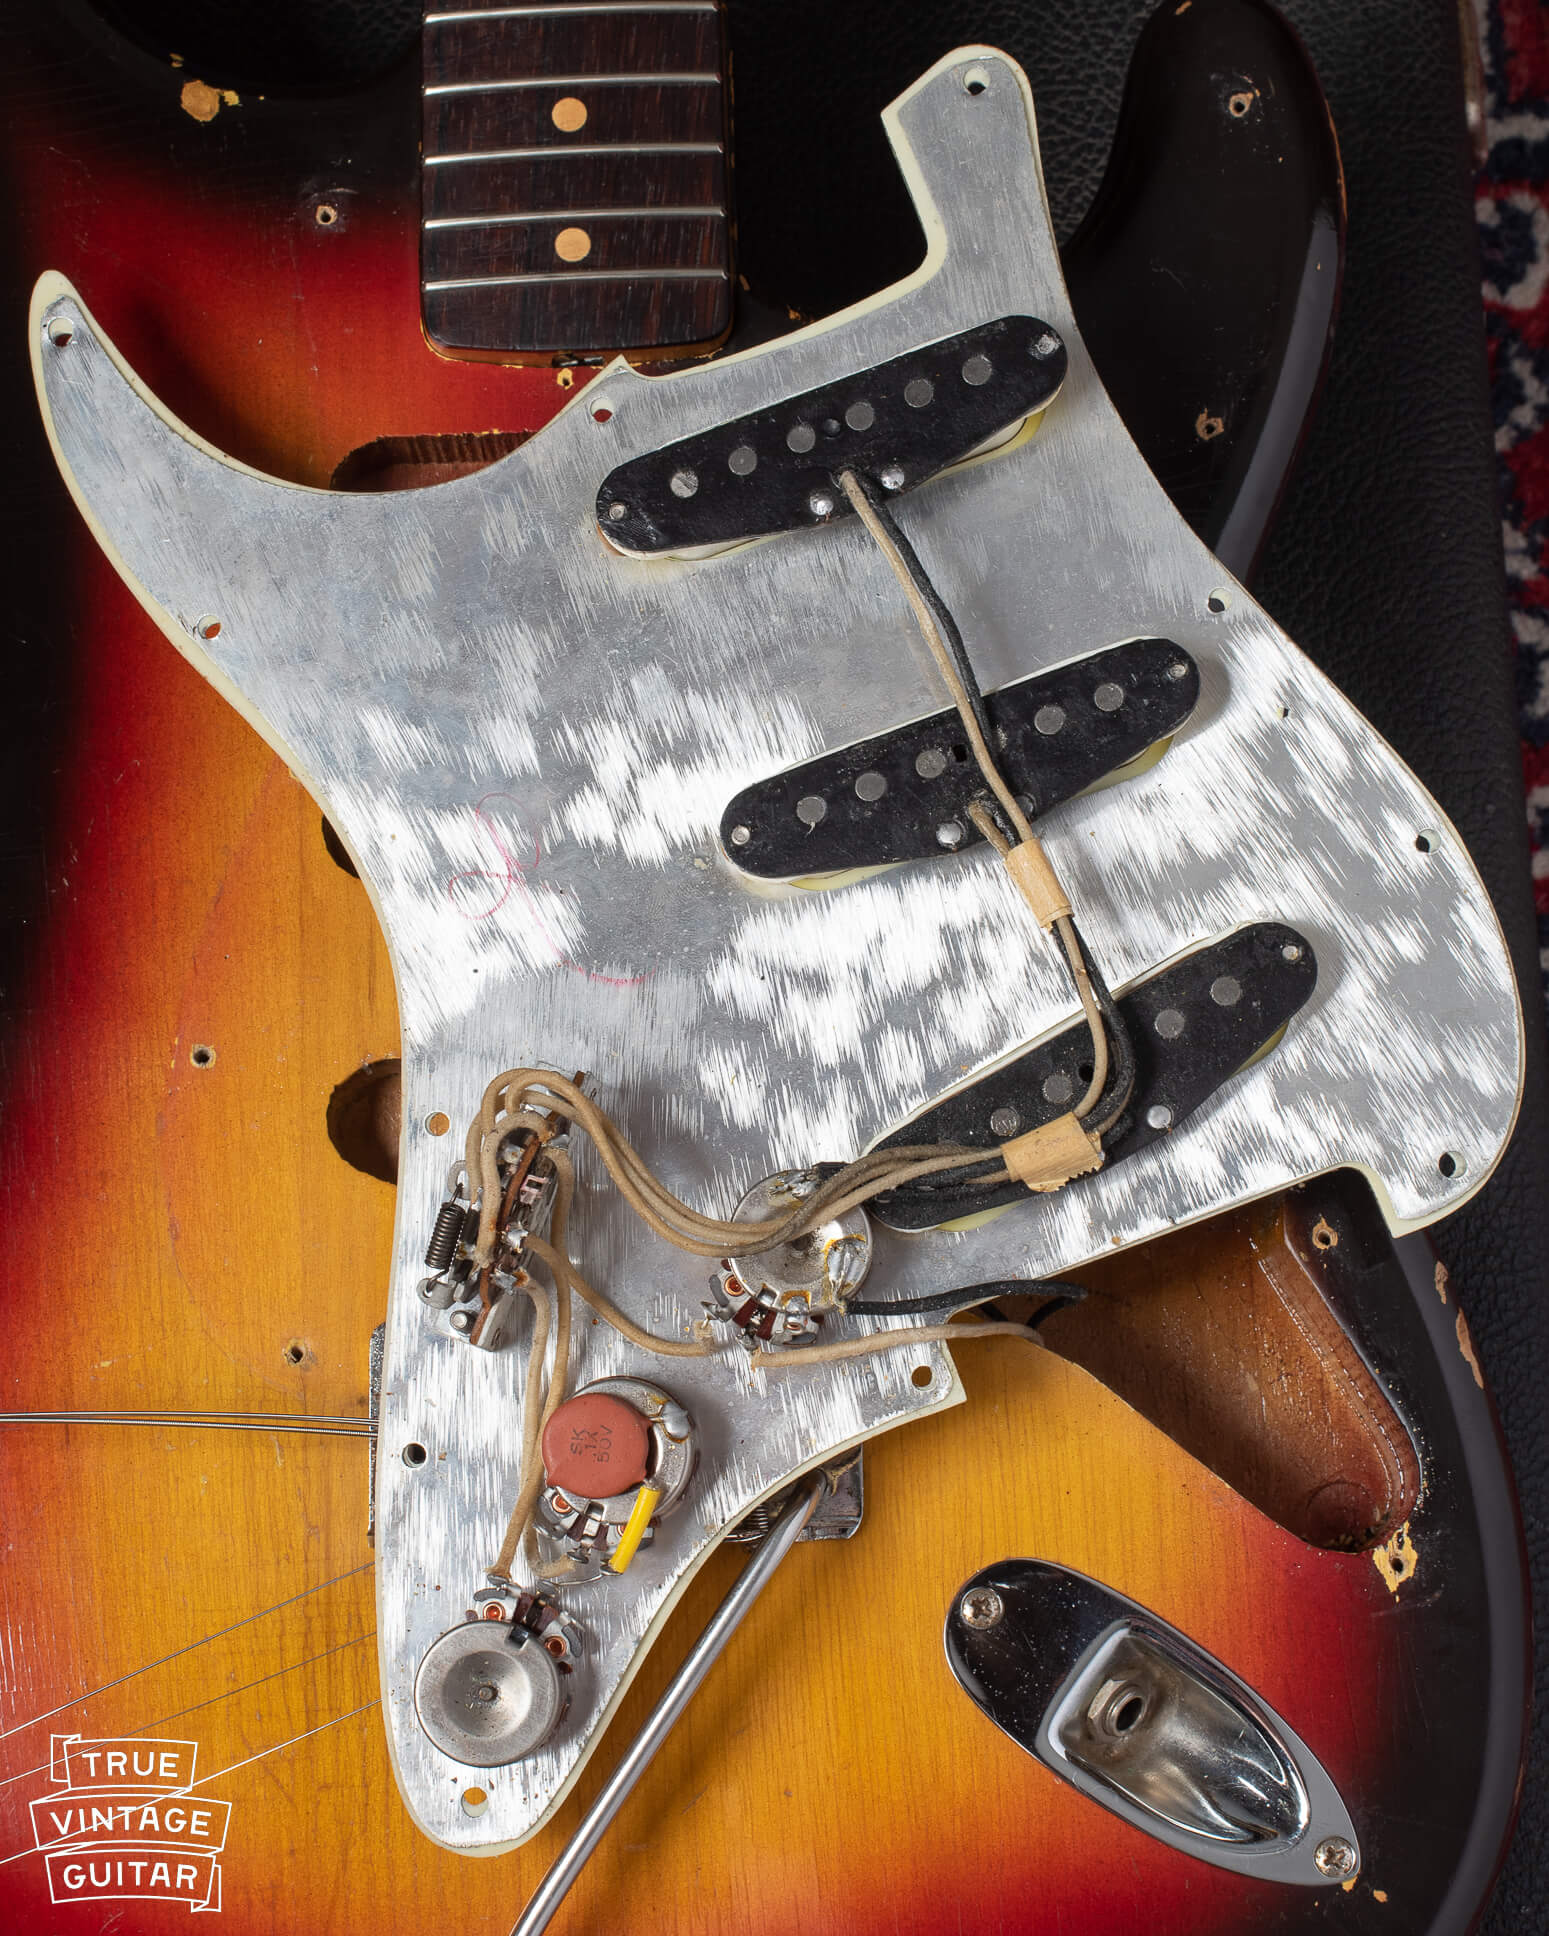 1963 Stratocaster black bobbin pickups, three way switch, wiring, and potentiometers